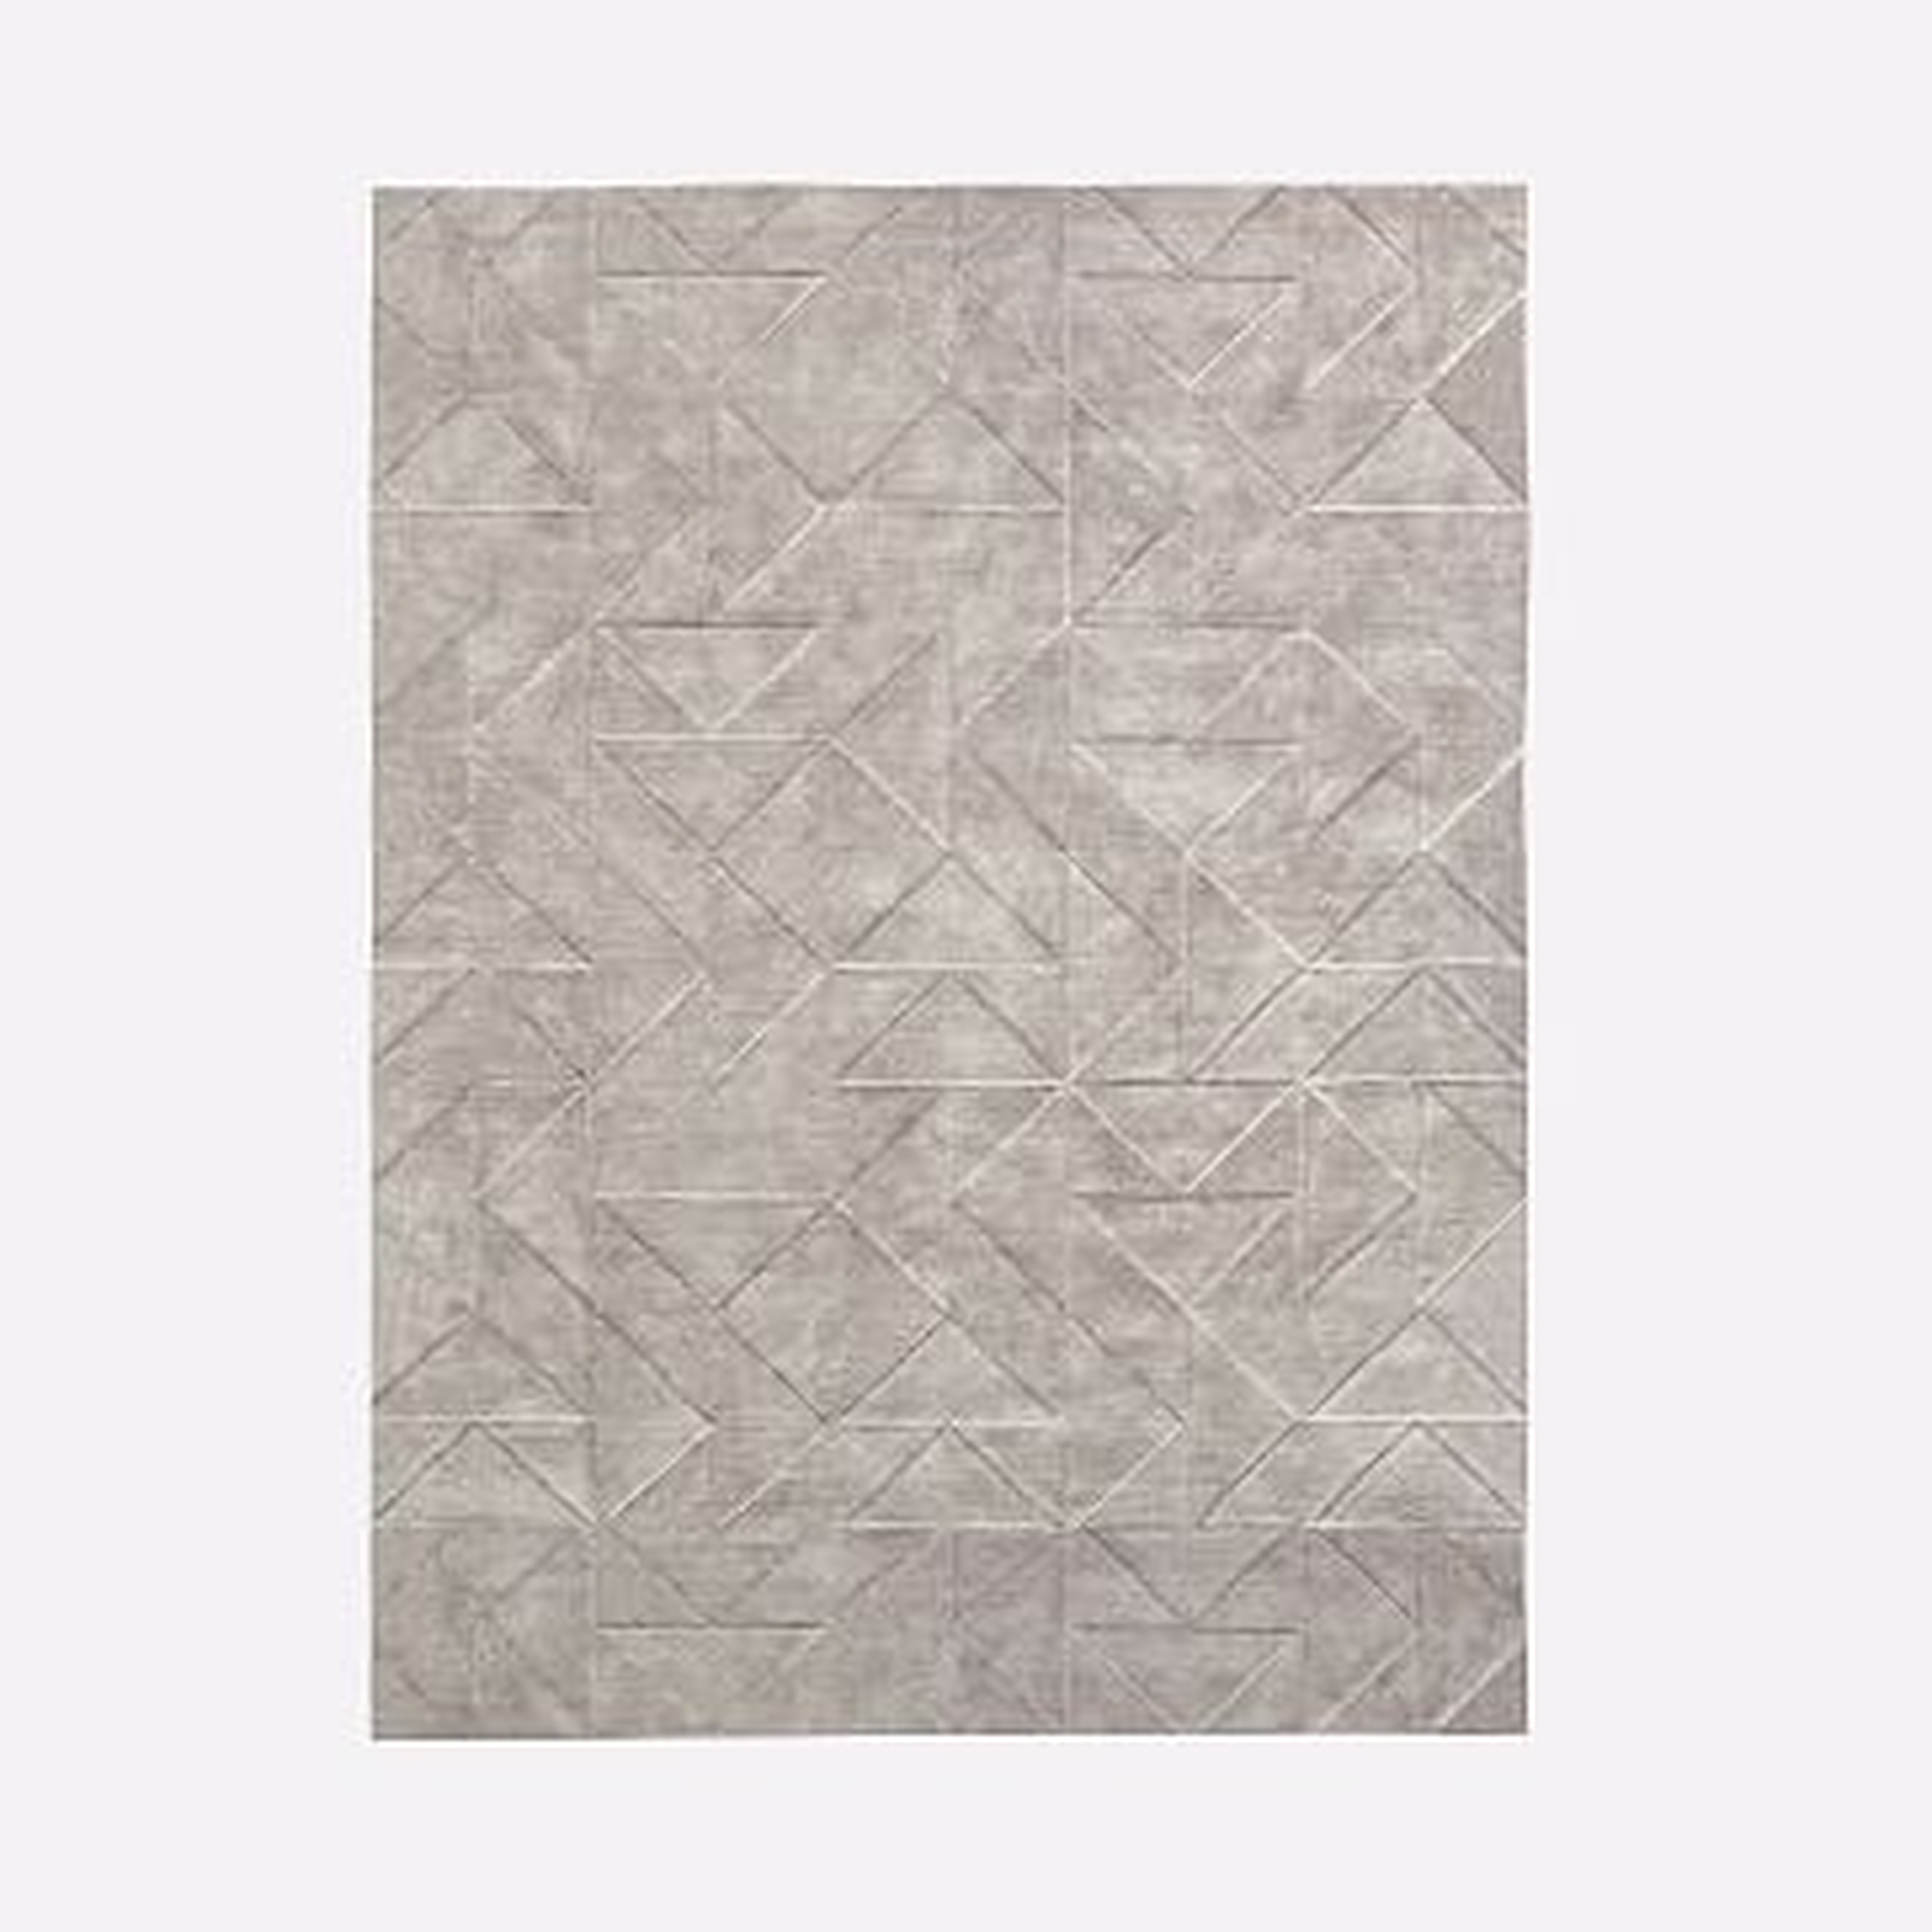 Carved Triangles Wool Rug, Platinum, 9'x12' - West Elm